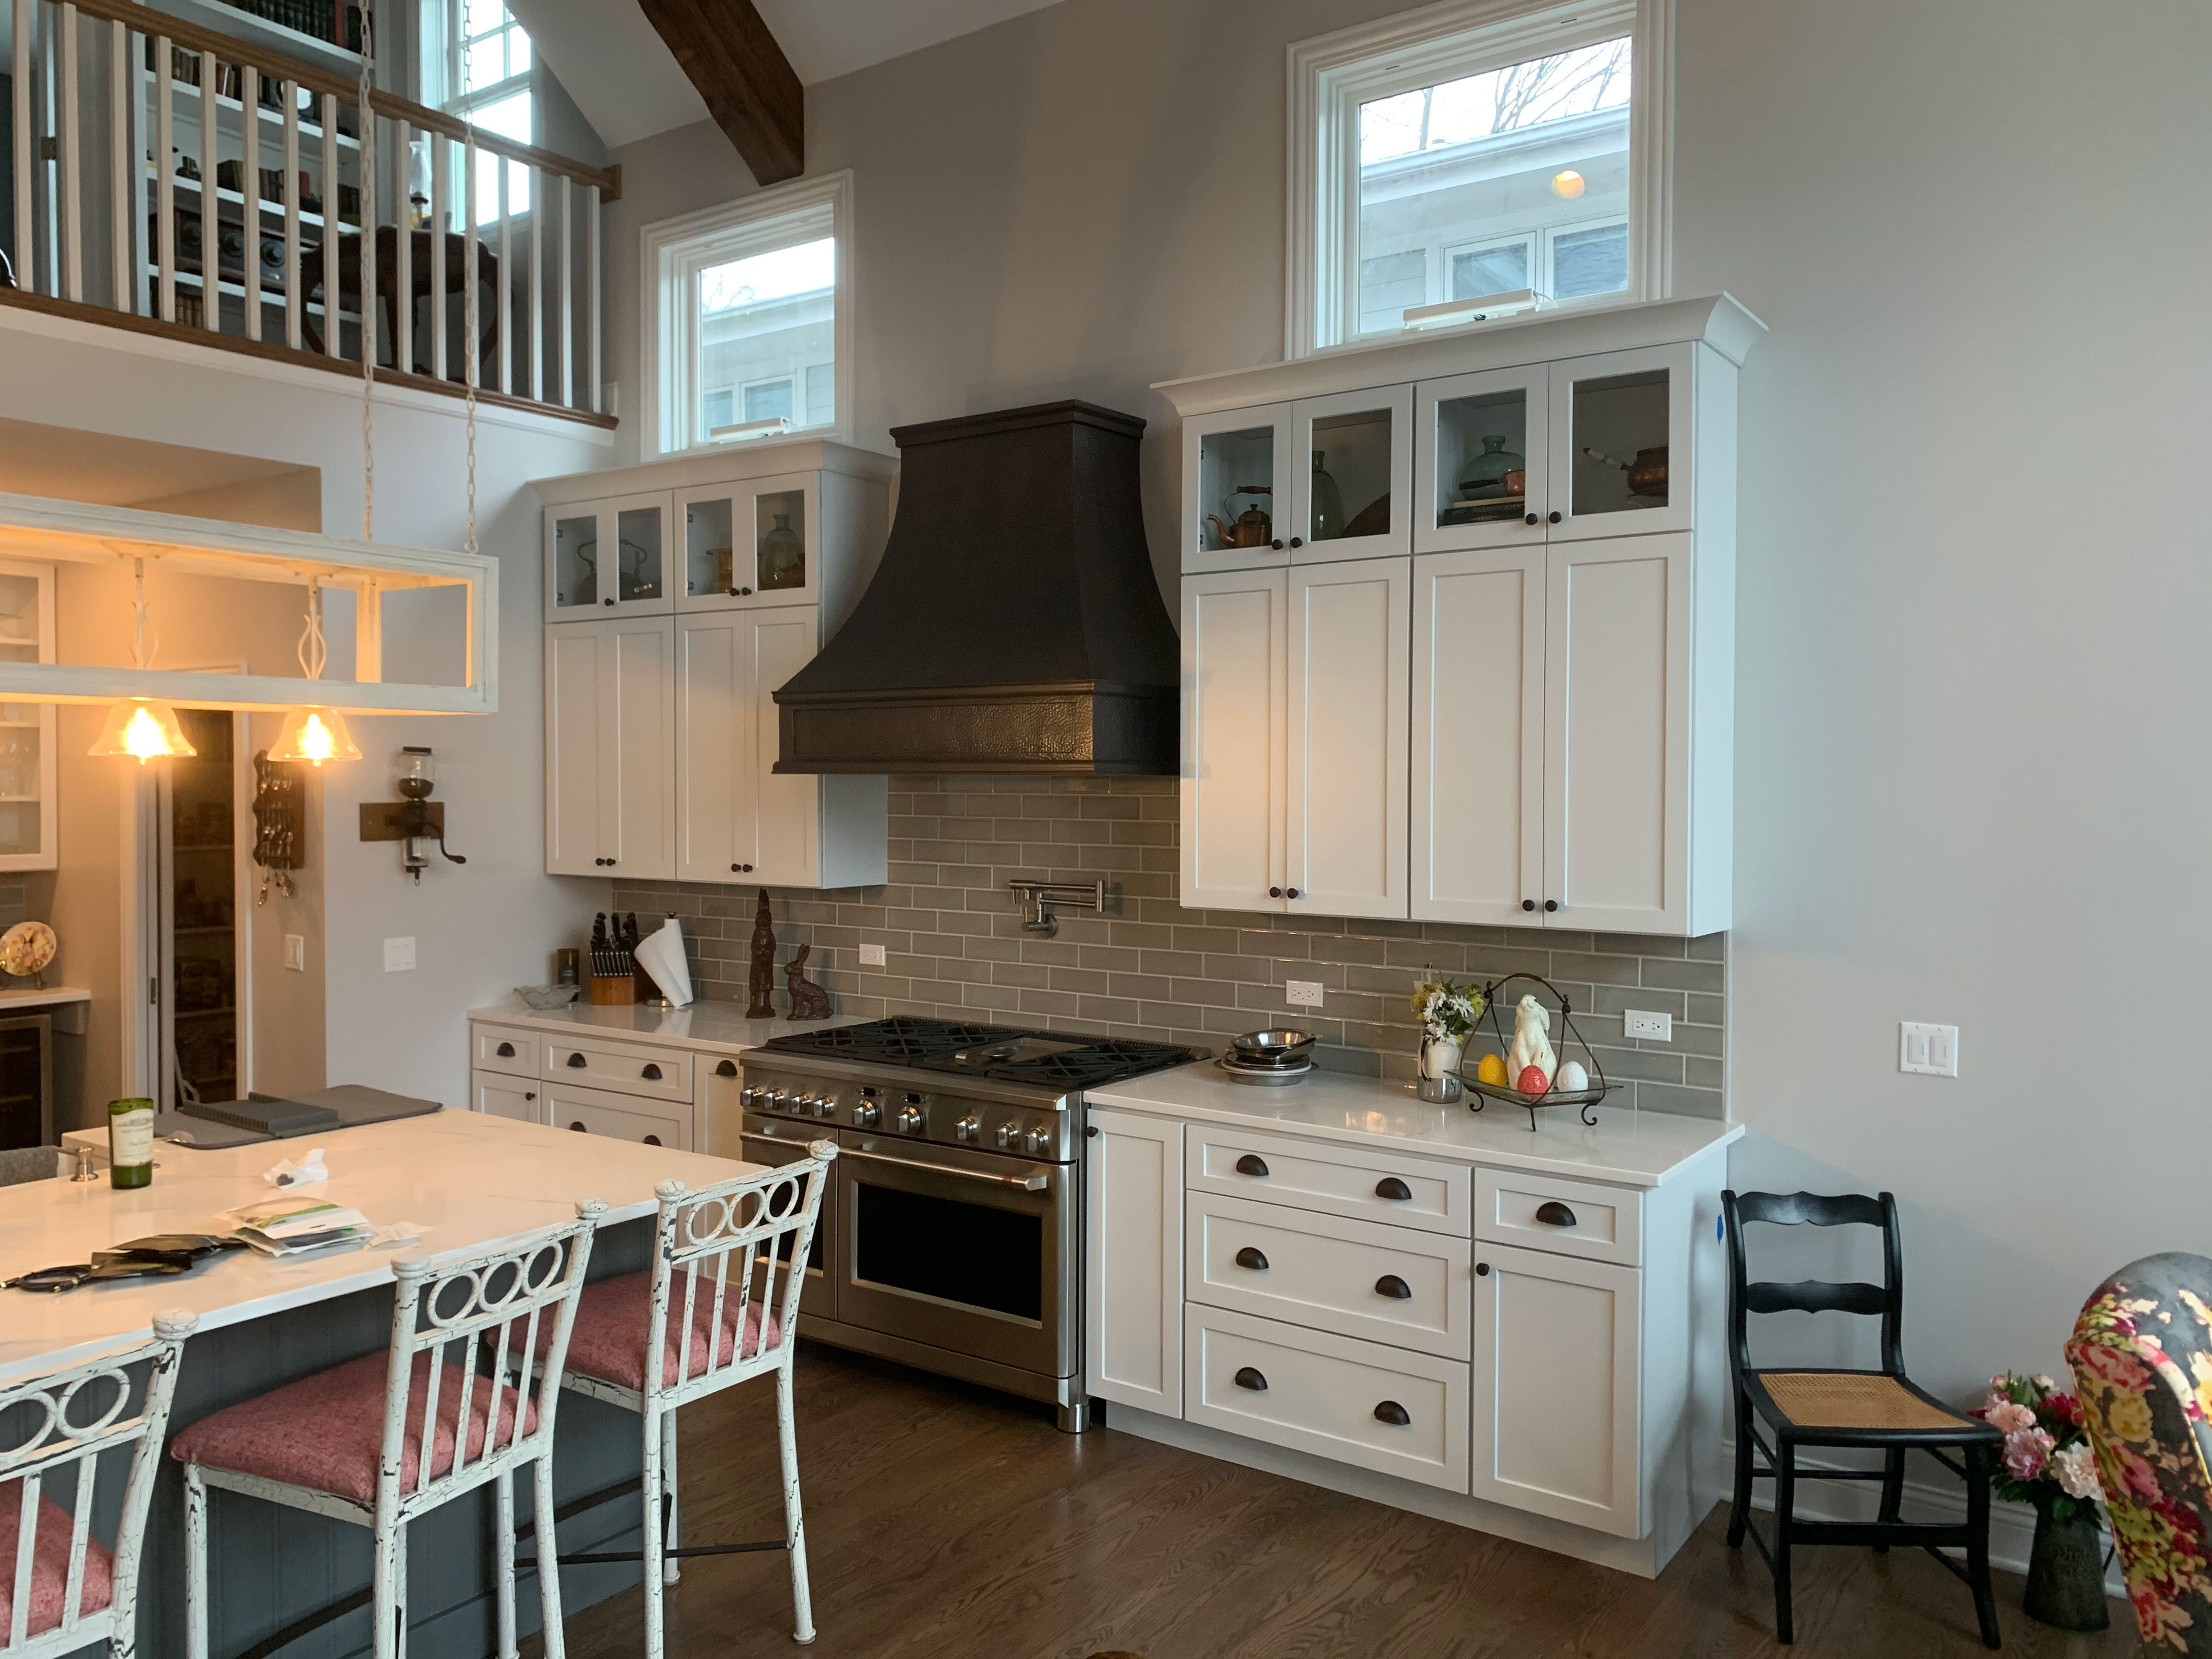 A coastal-inspired kitchen with sleek range hood, white cabinets, white countertops, charming brick backsplash